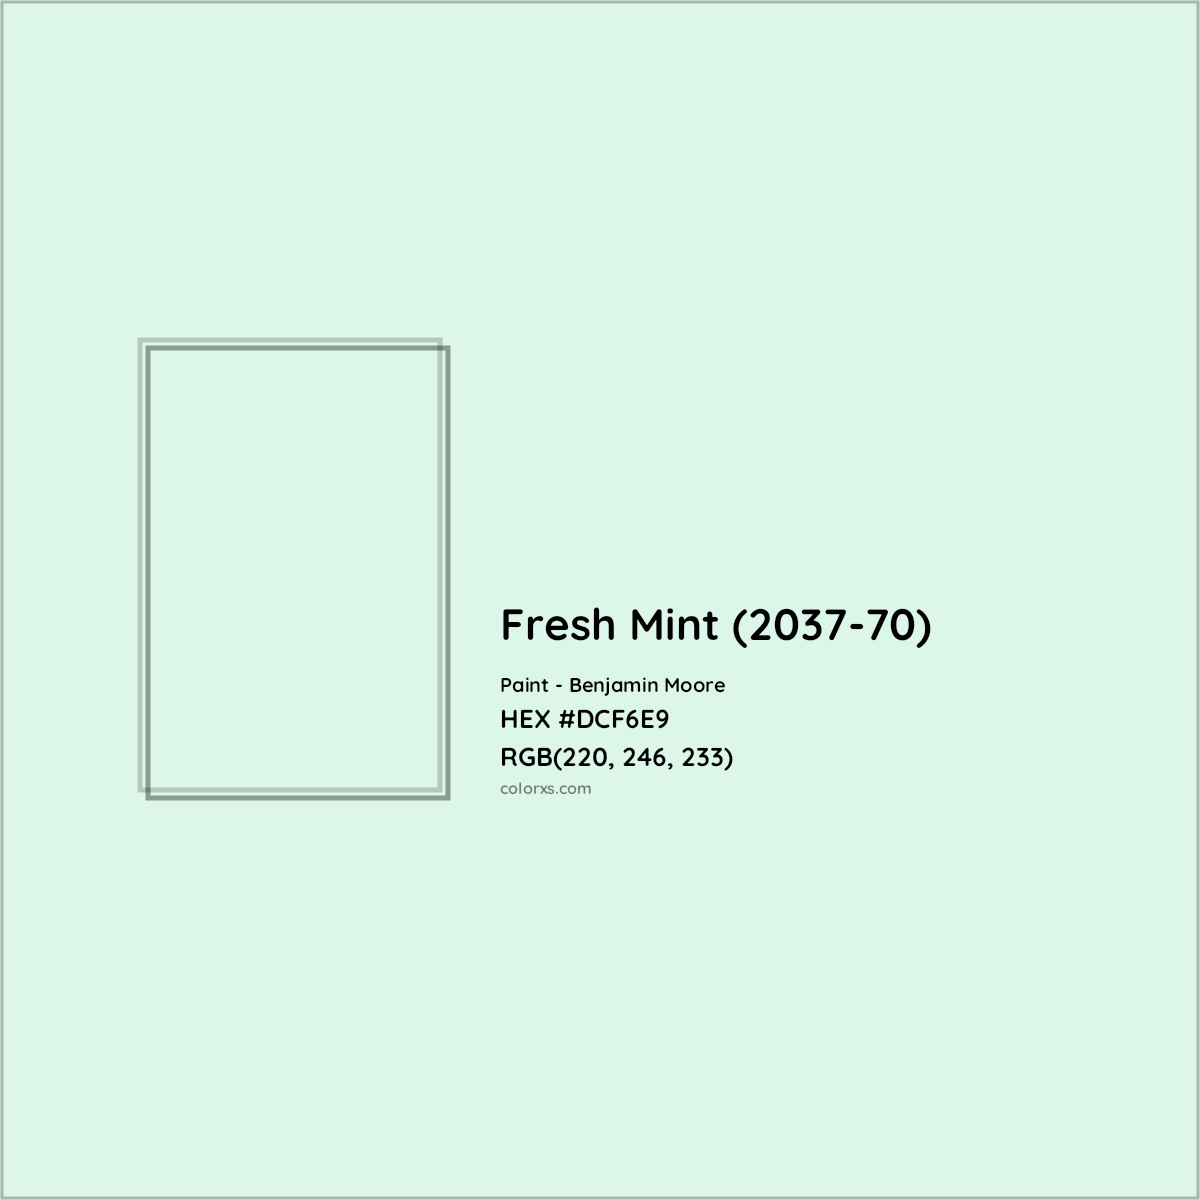 HEX #DCF6E9 Fresh Mint (2037-70) Paint Benjamin Moore - Color Code